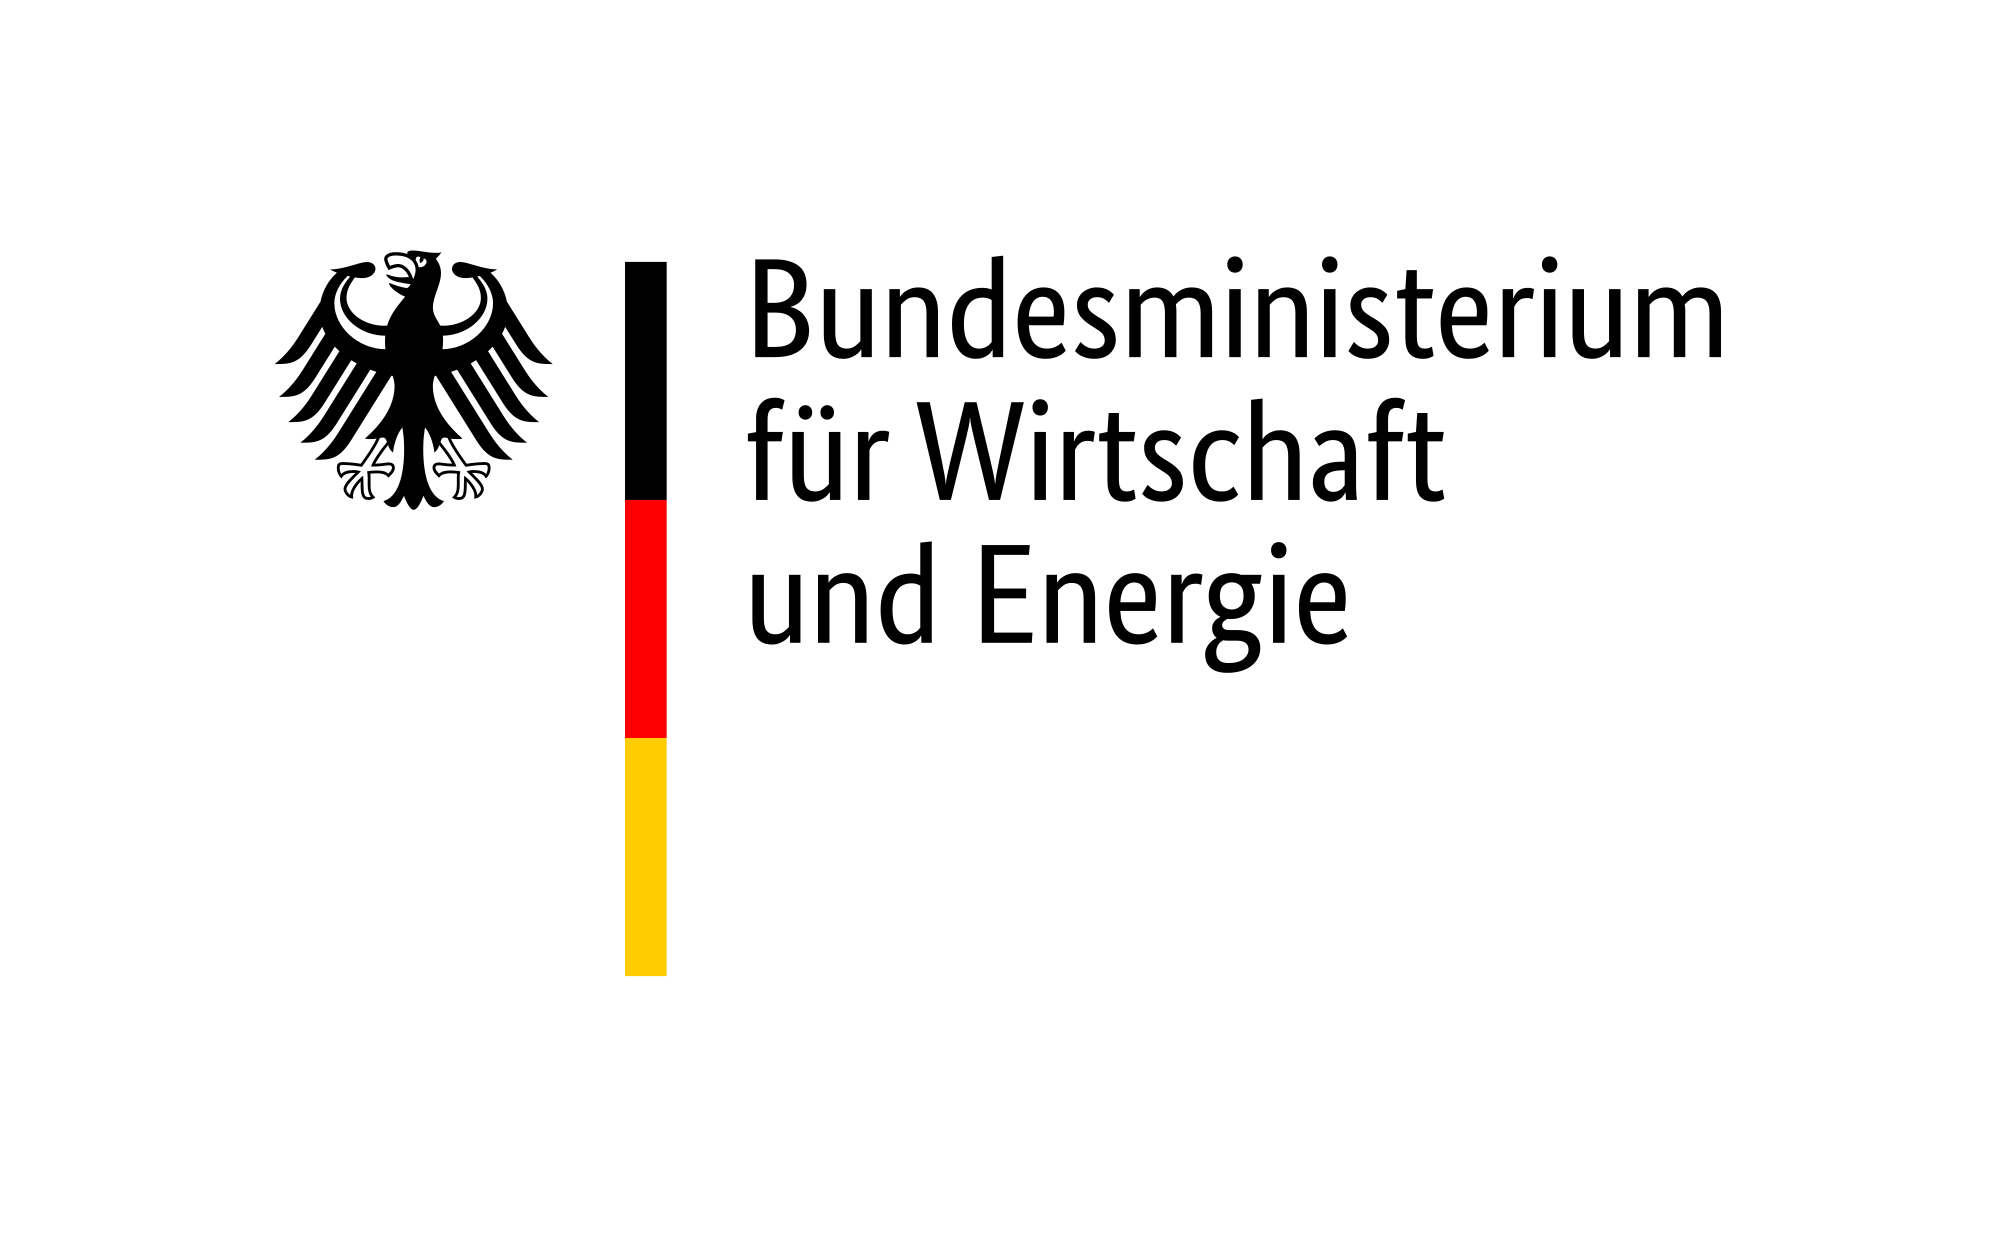 https://upload.wikimedia.org/wikipedia/commons/thumb/3/37/Bundesministerium_f%C3%BCr_Wirtschaft_und_Energie_Logo.svg/2000px-Bundesministerium_f%C3%BCr_Wirtschaft_und_Energie_Logo.svg.png